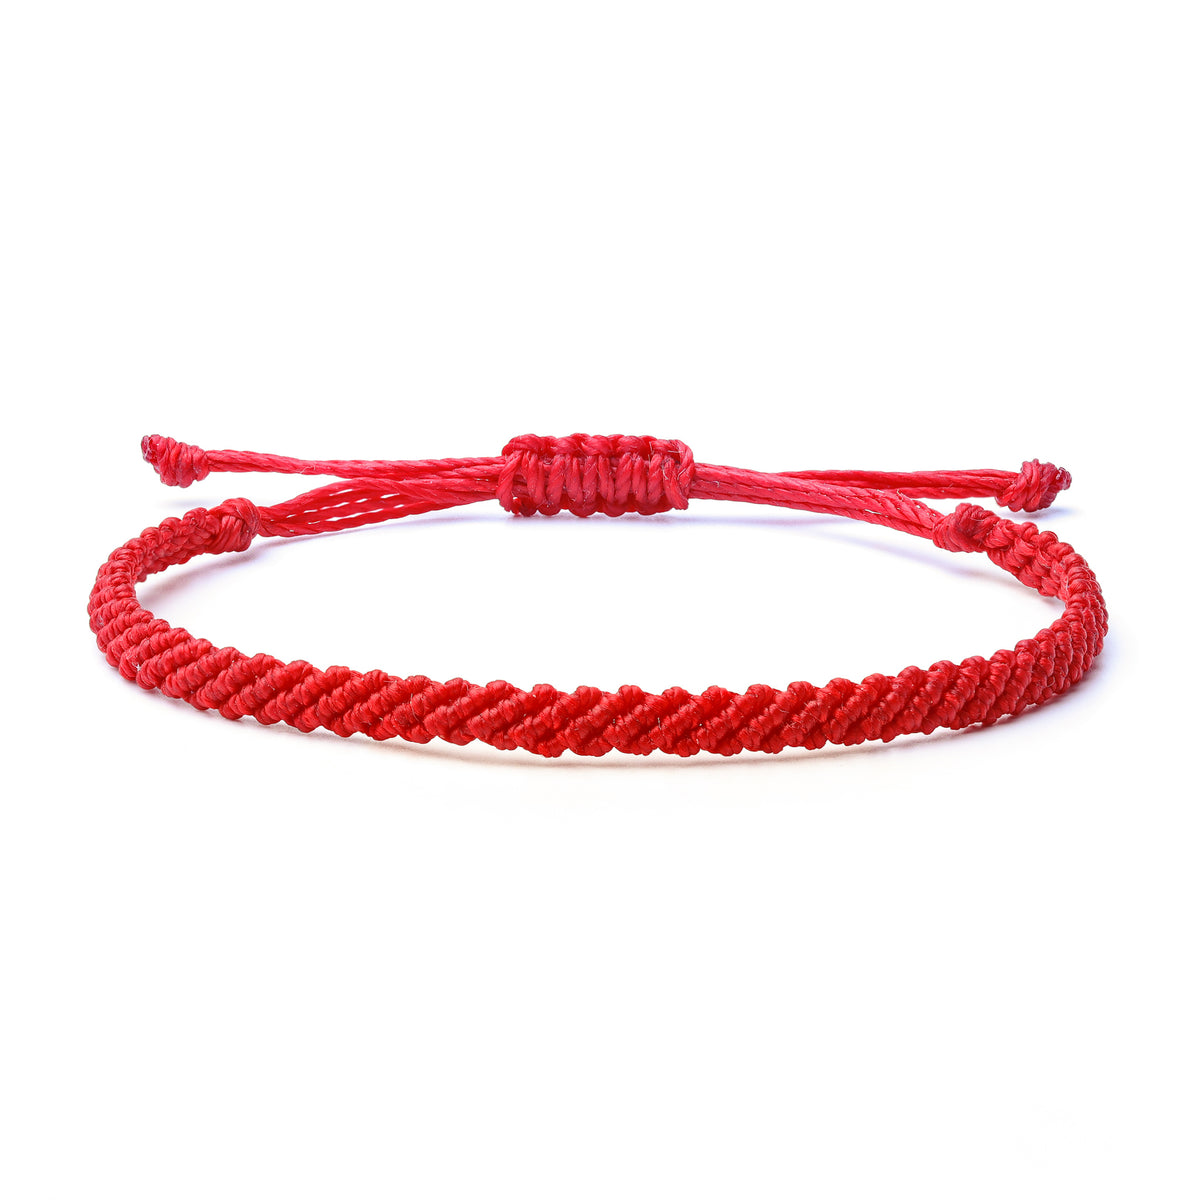 Camo Bracelet Twisted Cord String